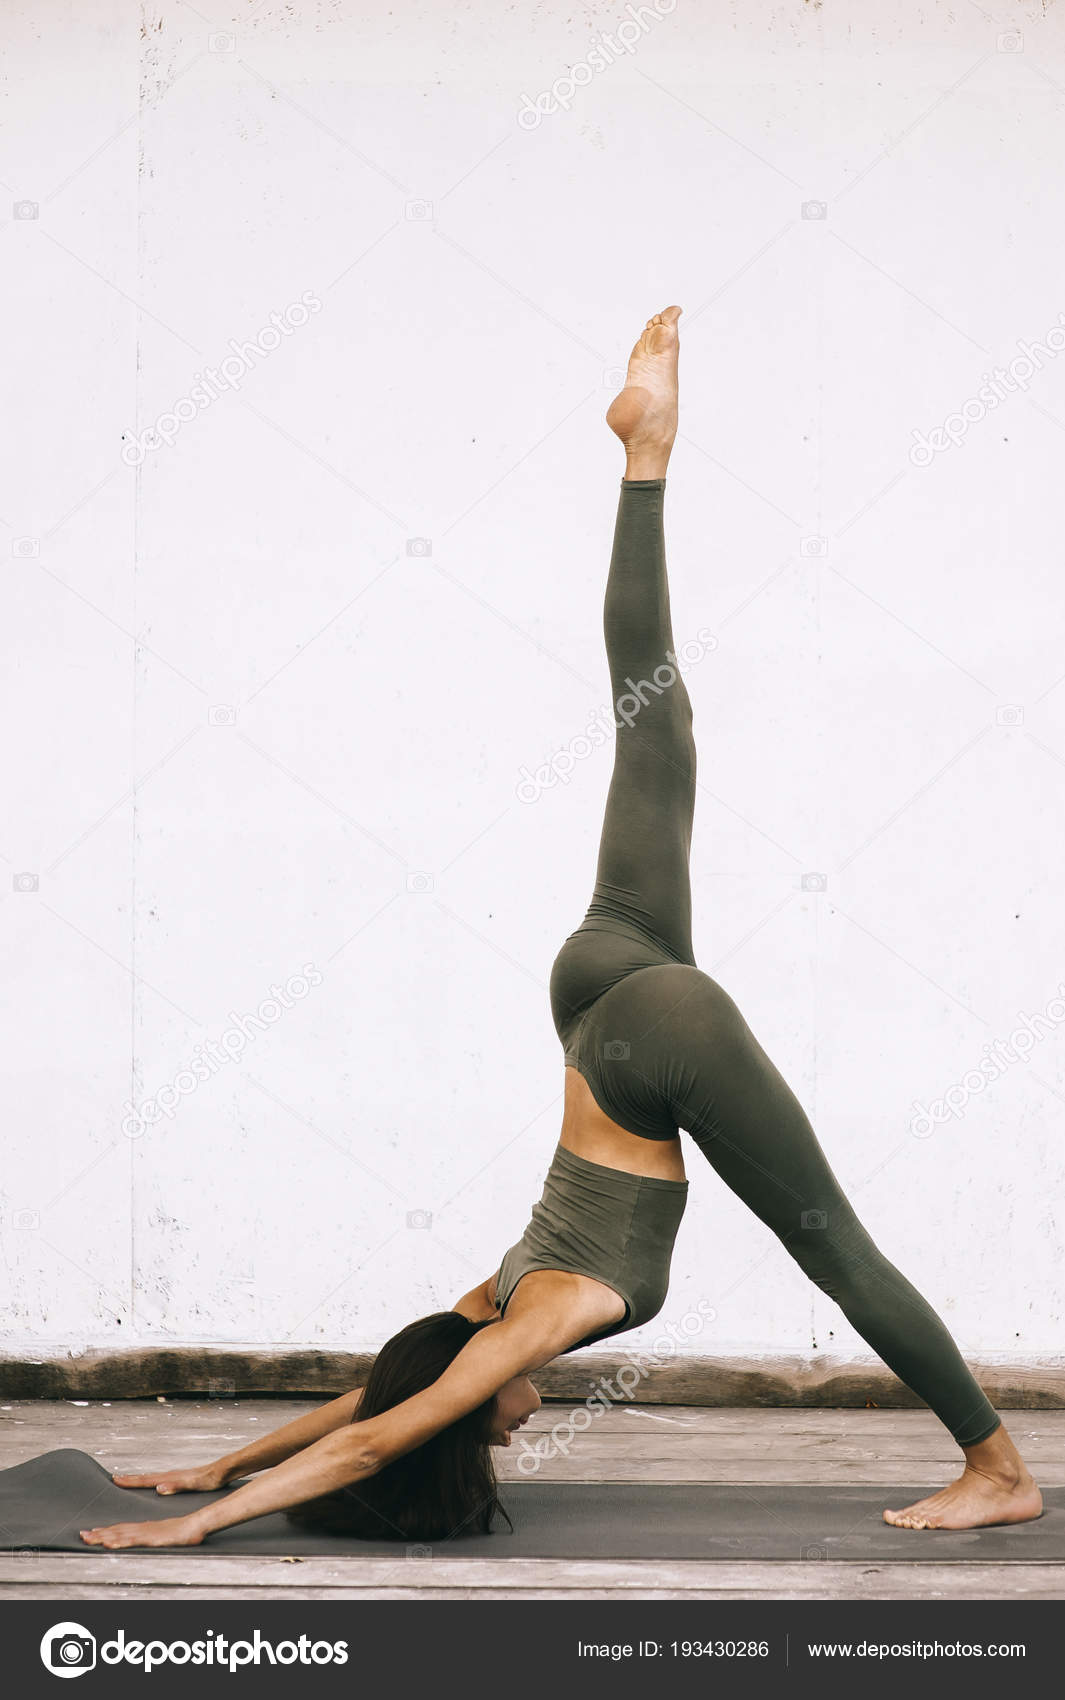 Best 10 Yoga Poses For Beginners | Sri Sri School of Yoga